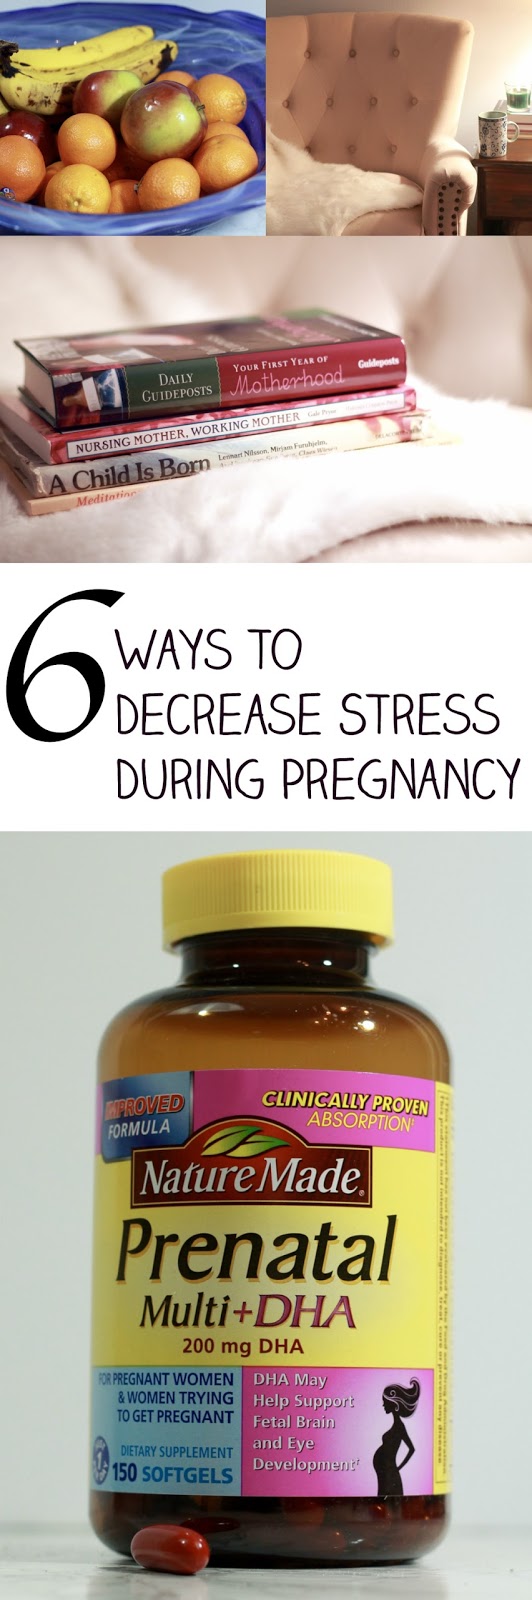 6 Ways to Decrease Stress During Pregnancy